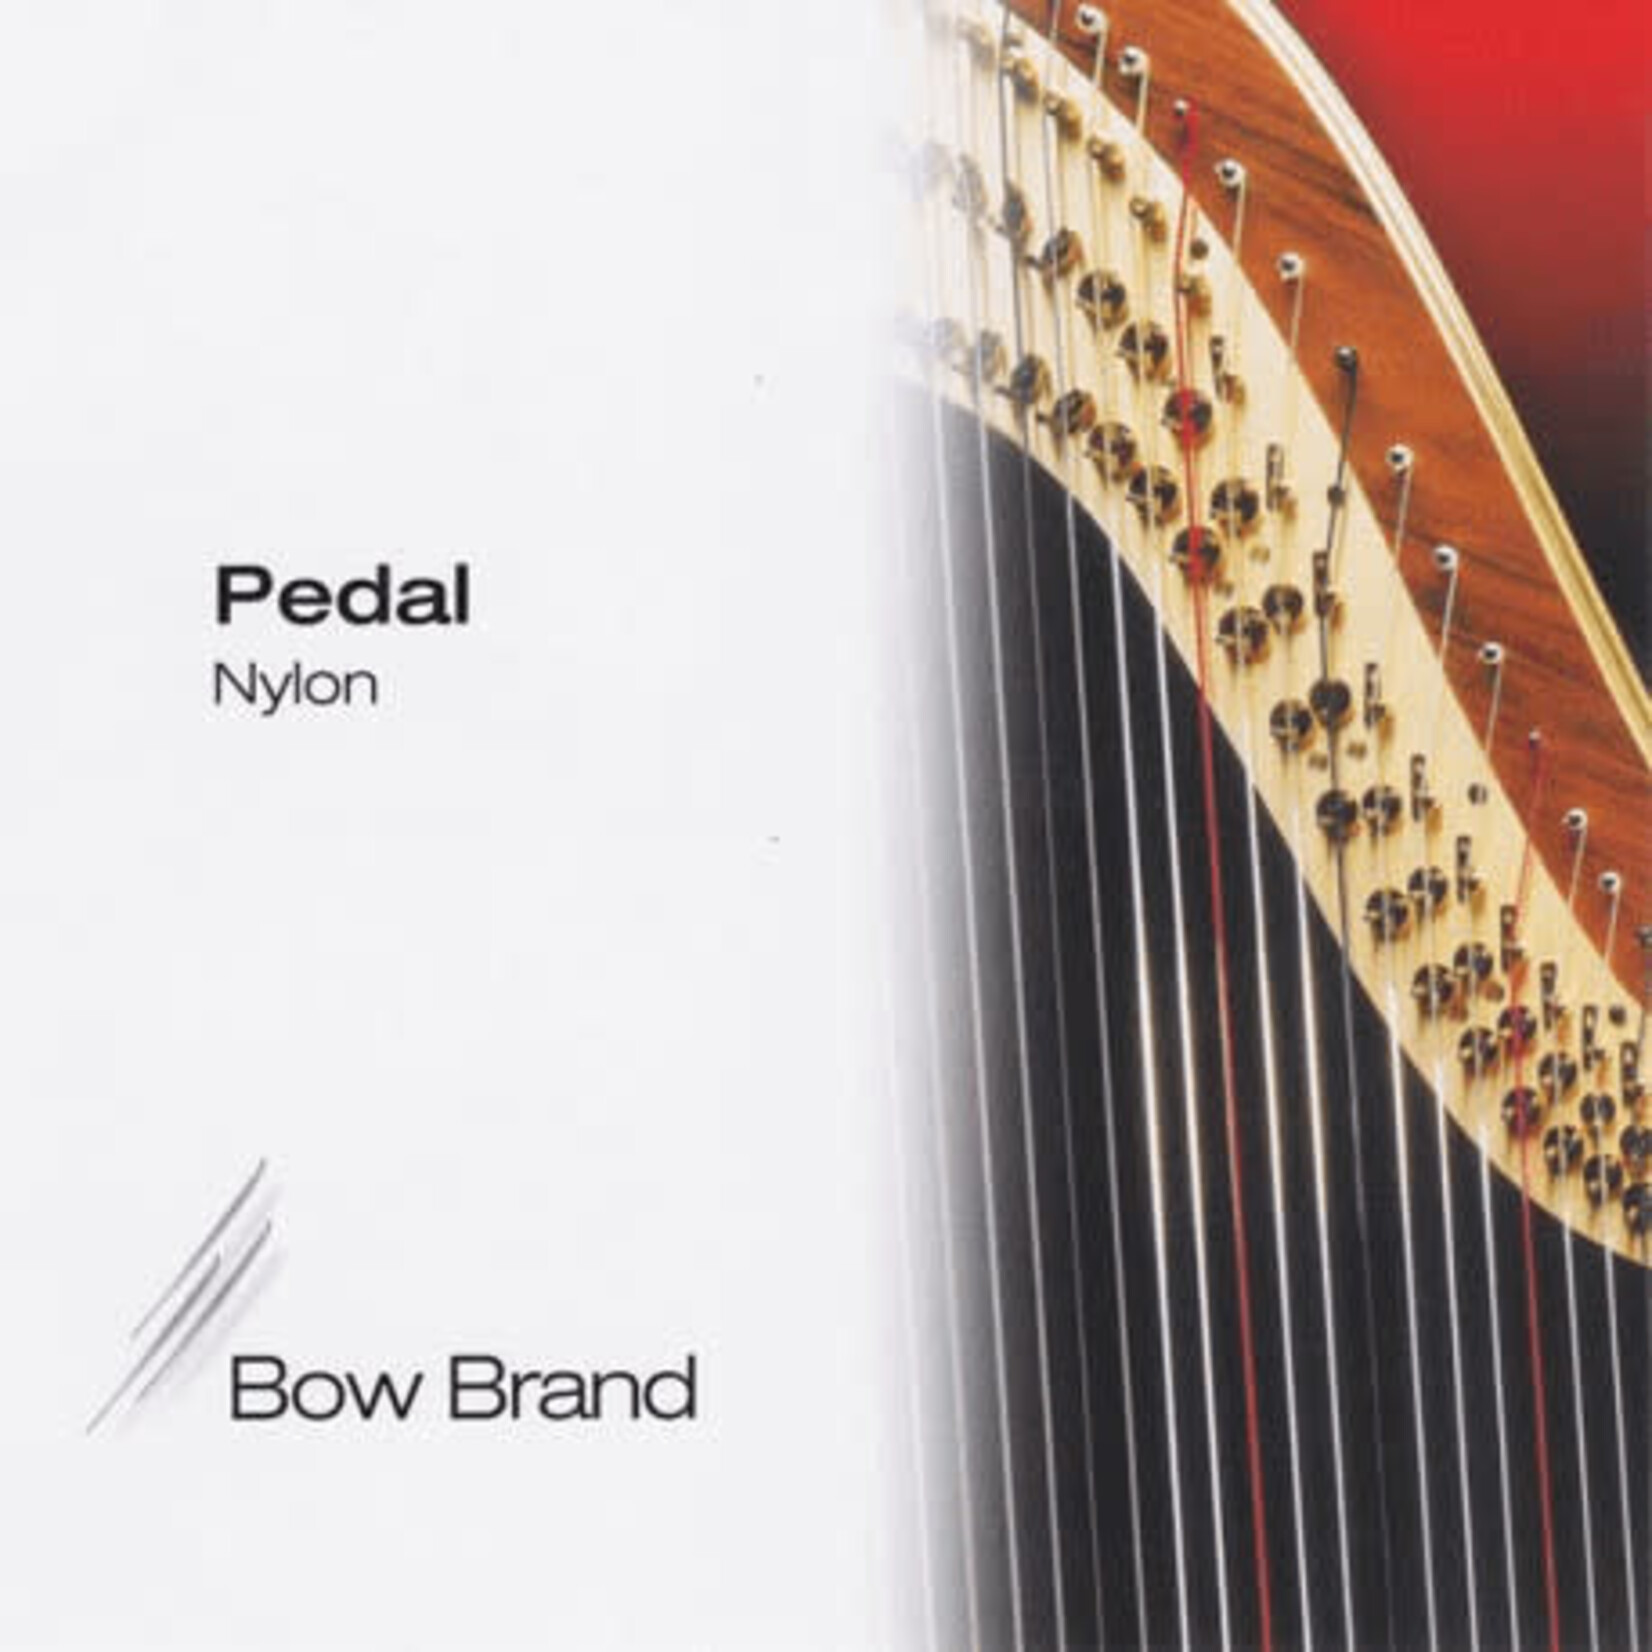 BOW BRAND pedaal nylon - pedal NYLON (set) - 2de octaaf - inclusief 5% korting